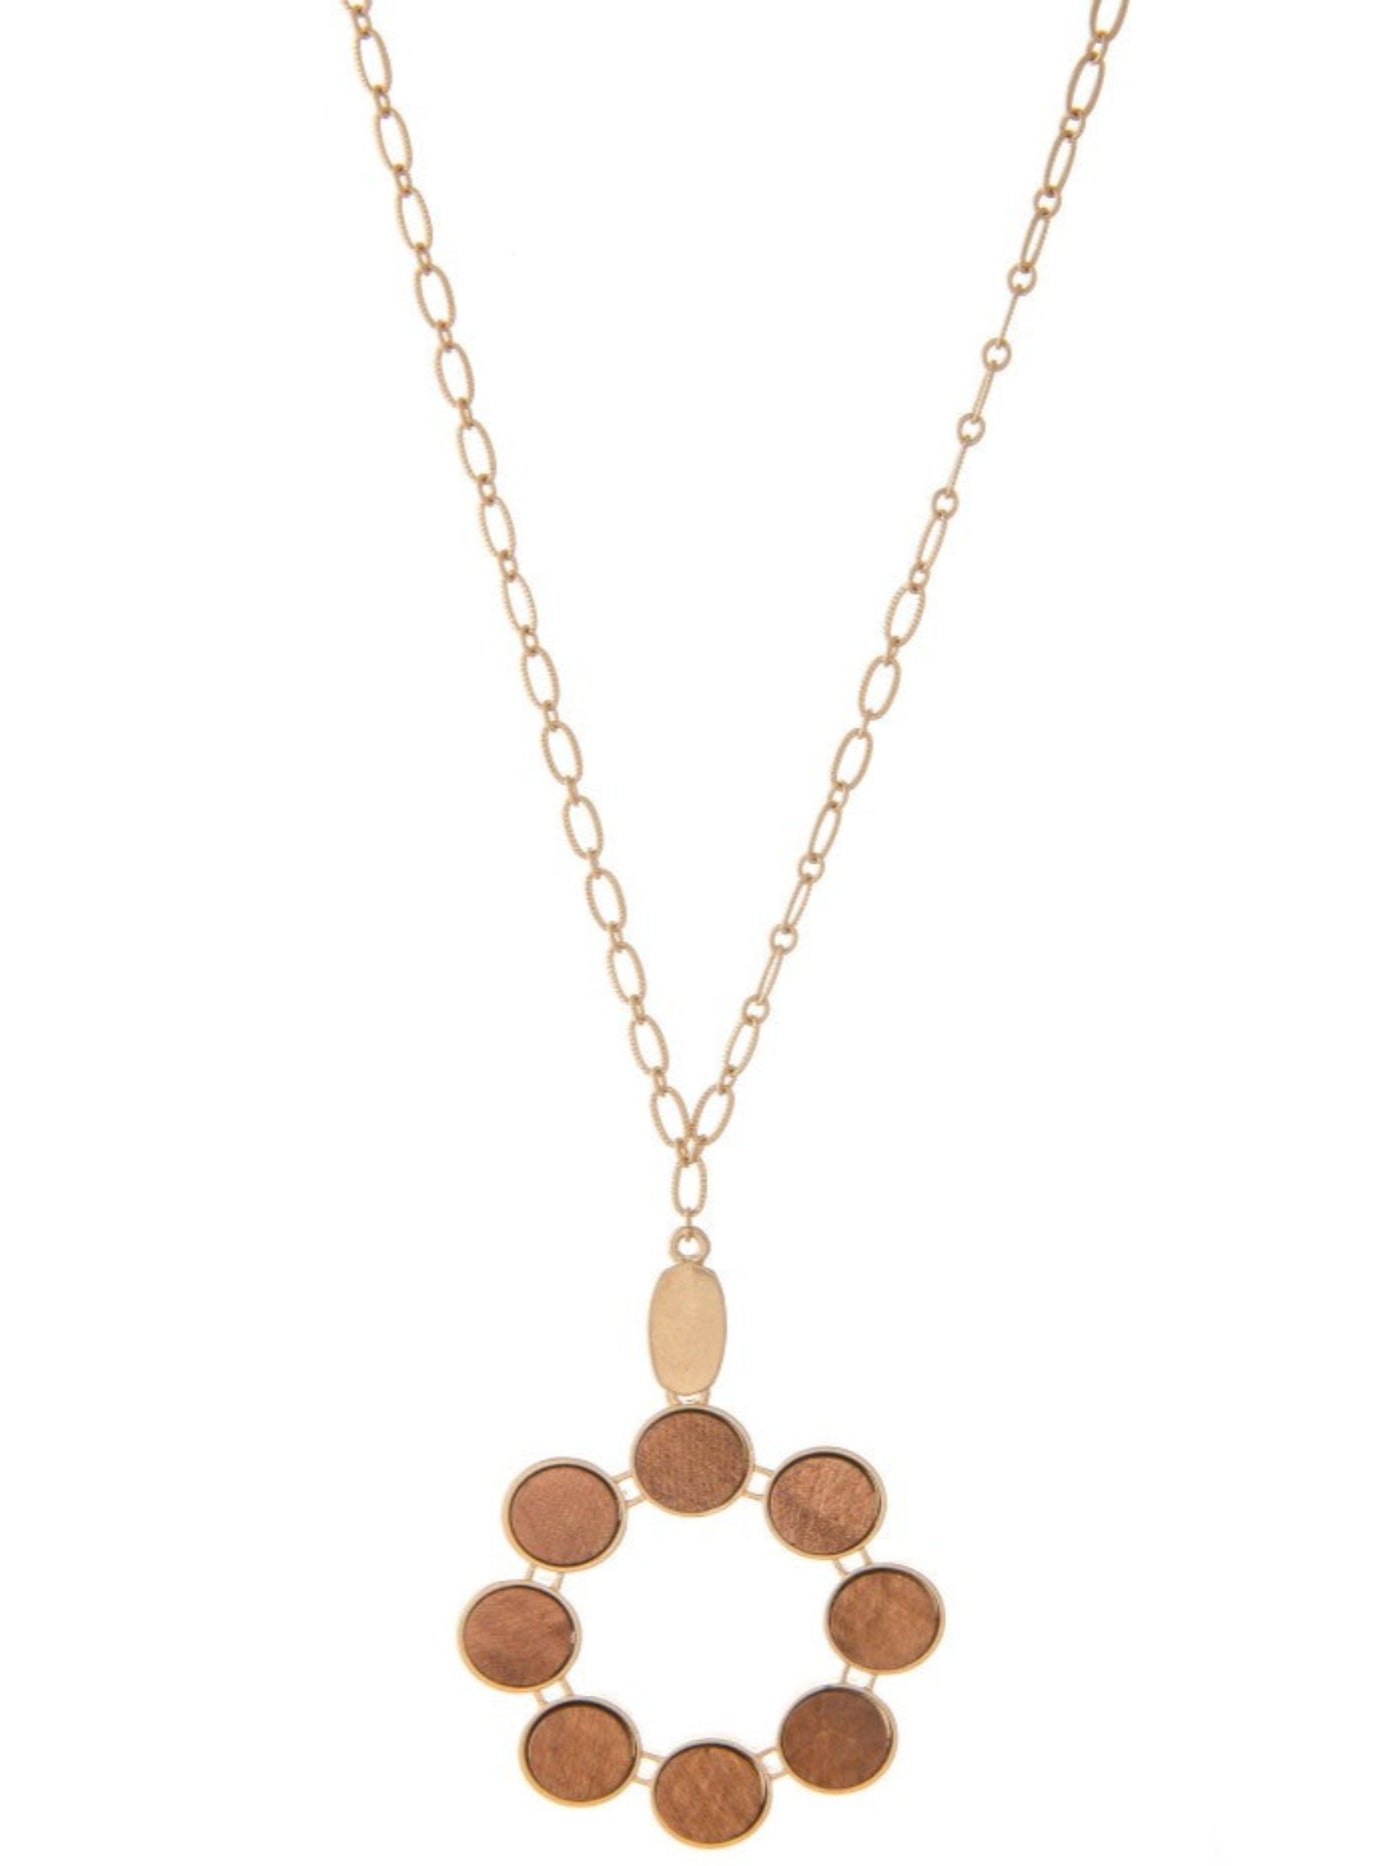 Metal Encased Wooden Circular Pendant Long Necklace, Light Brown